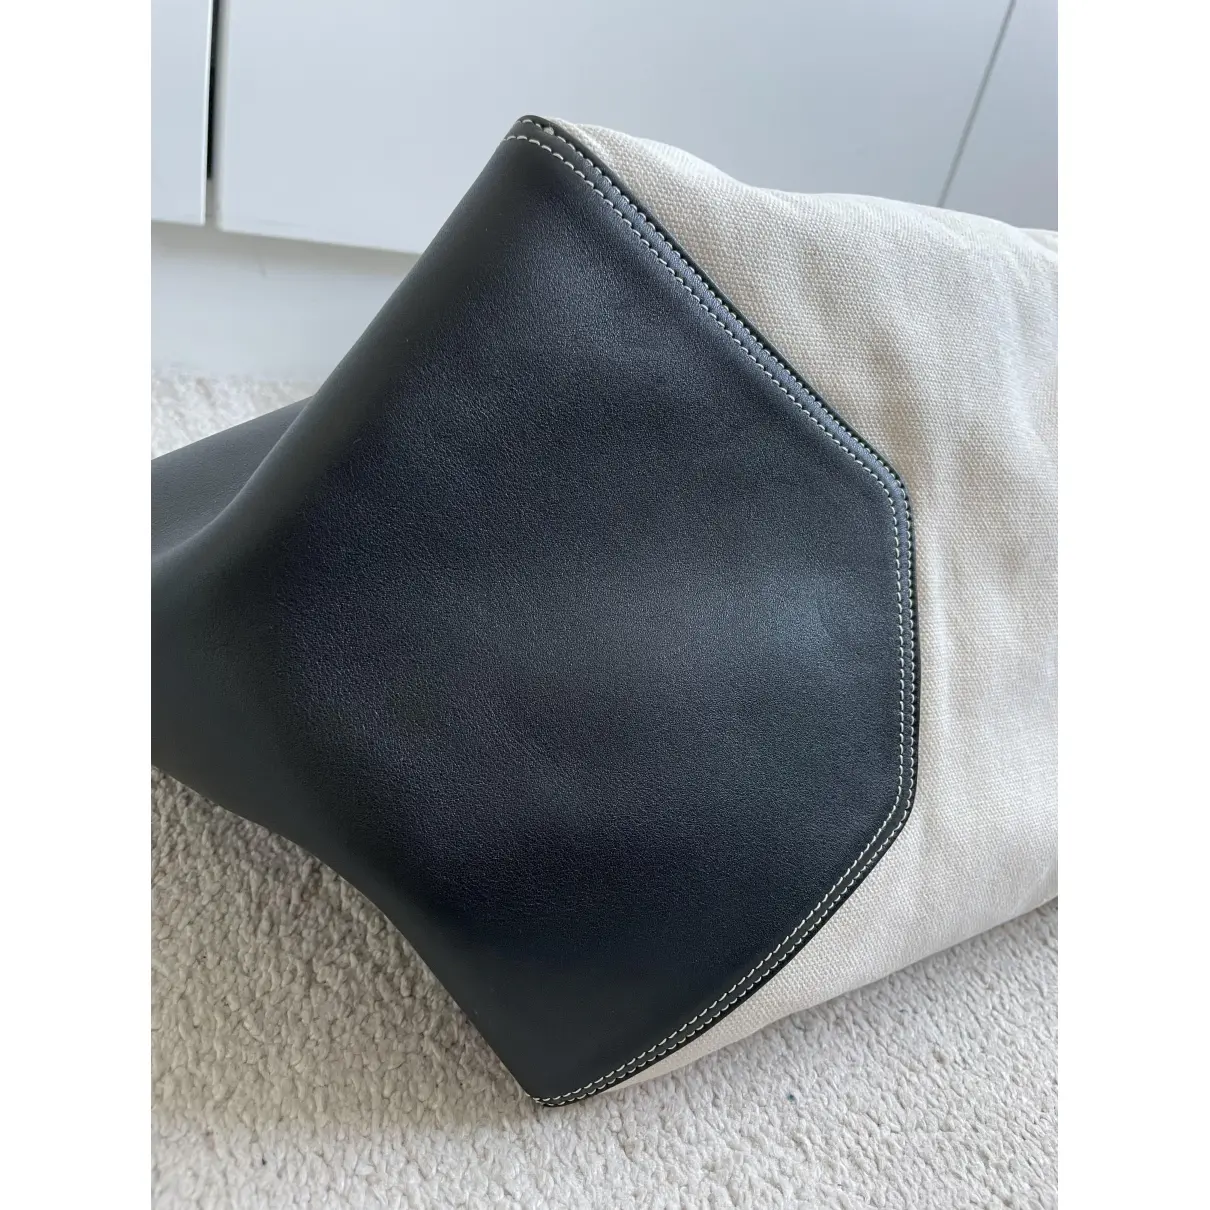 Buy Celine Made In Tote Bag leather tote online - Vintage